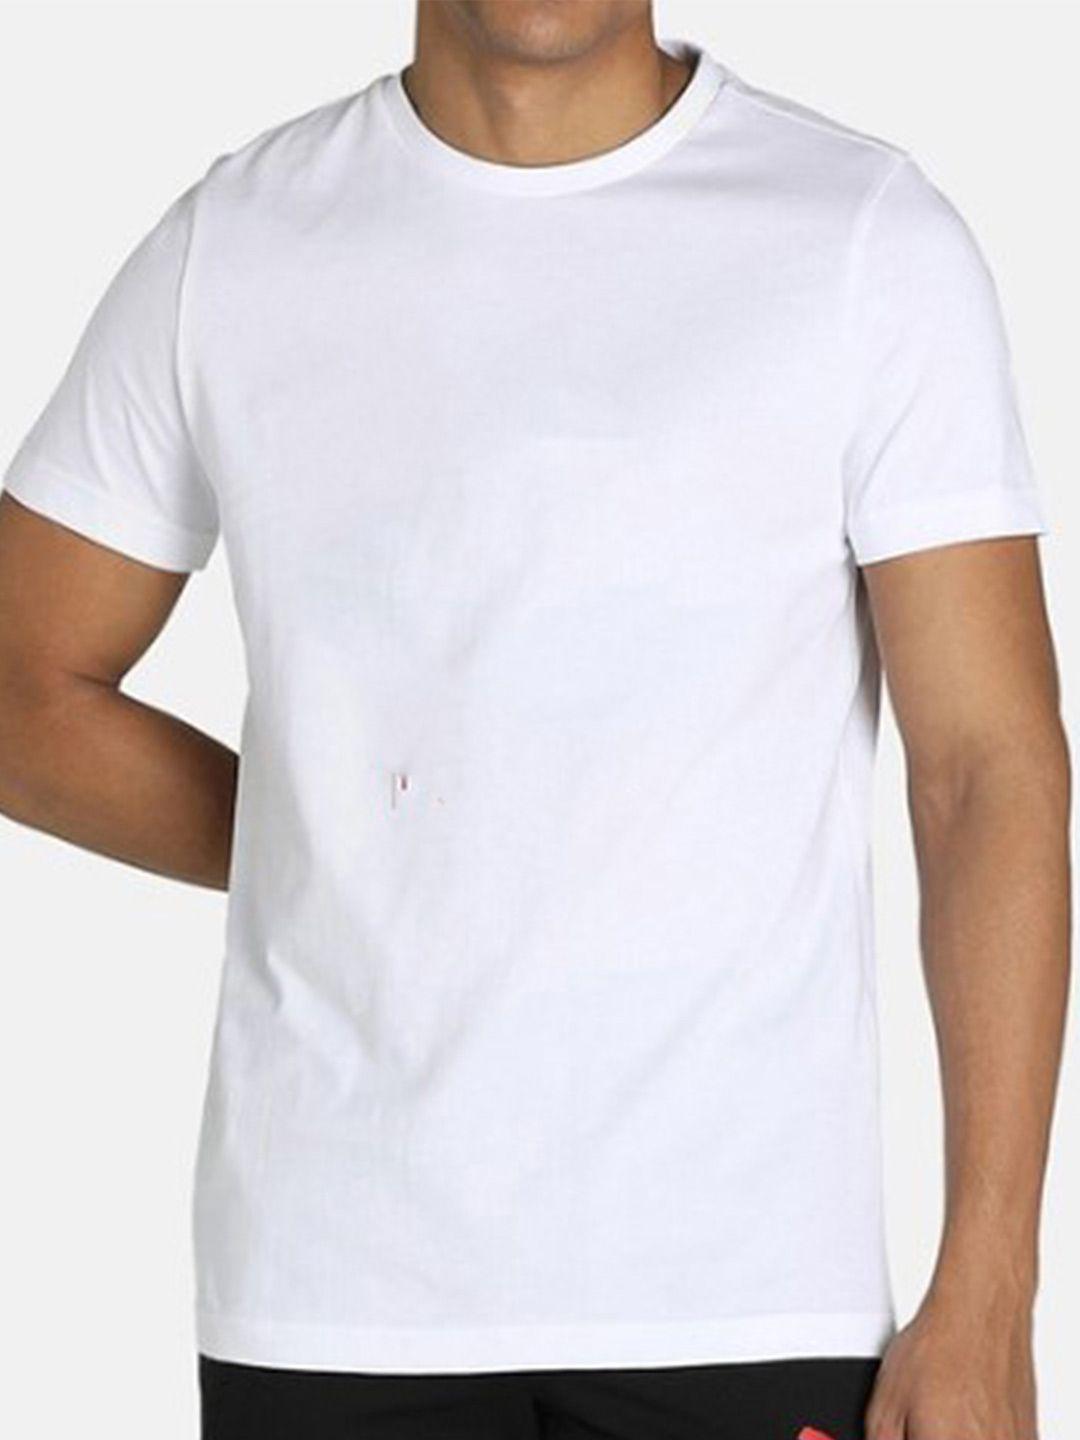 kaezri round neck regular fit cotton t-shirt